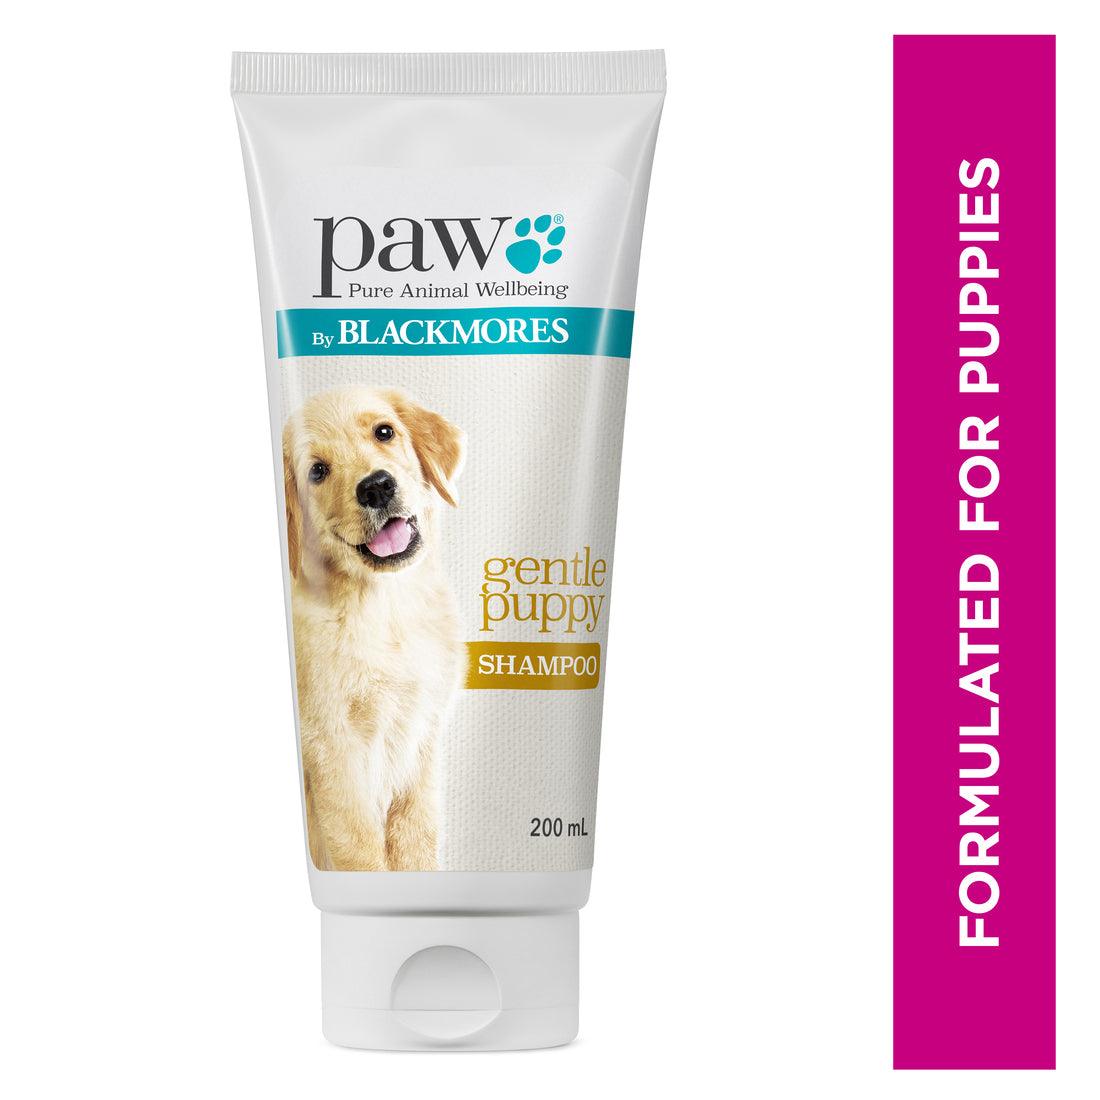 Blackmores PAW - Gentle Puppy Shampoo, 200ml - PAWS CLUB